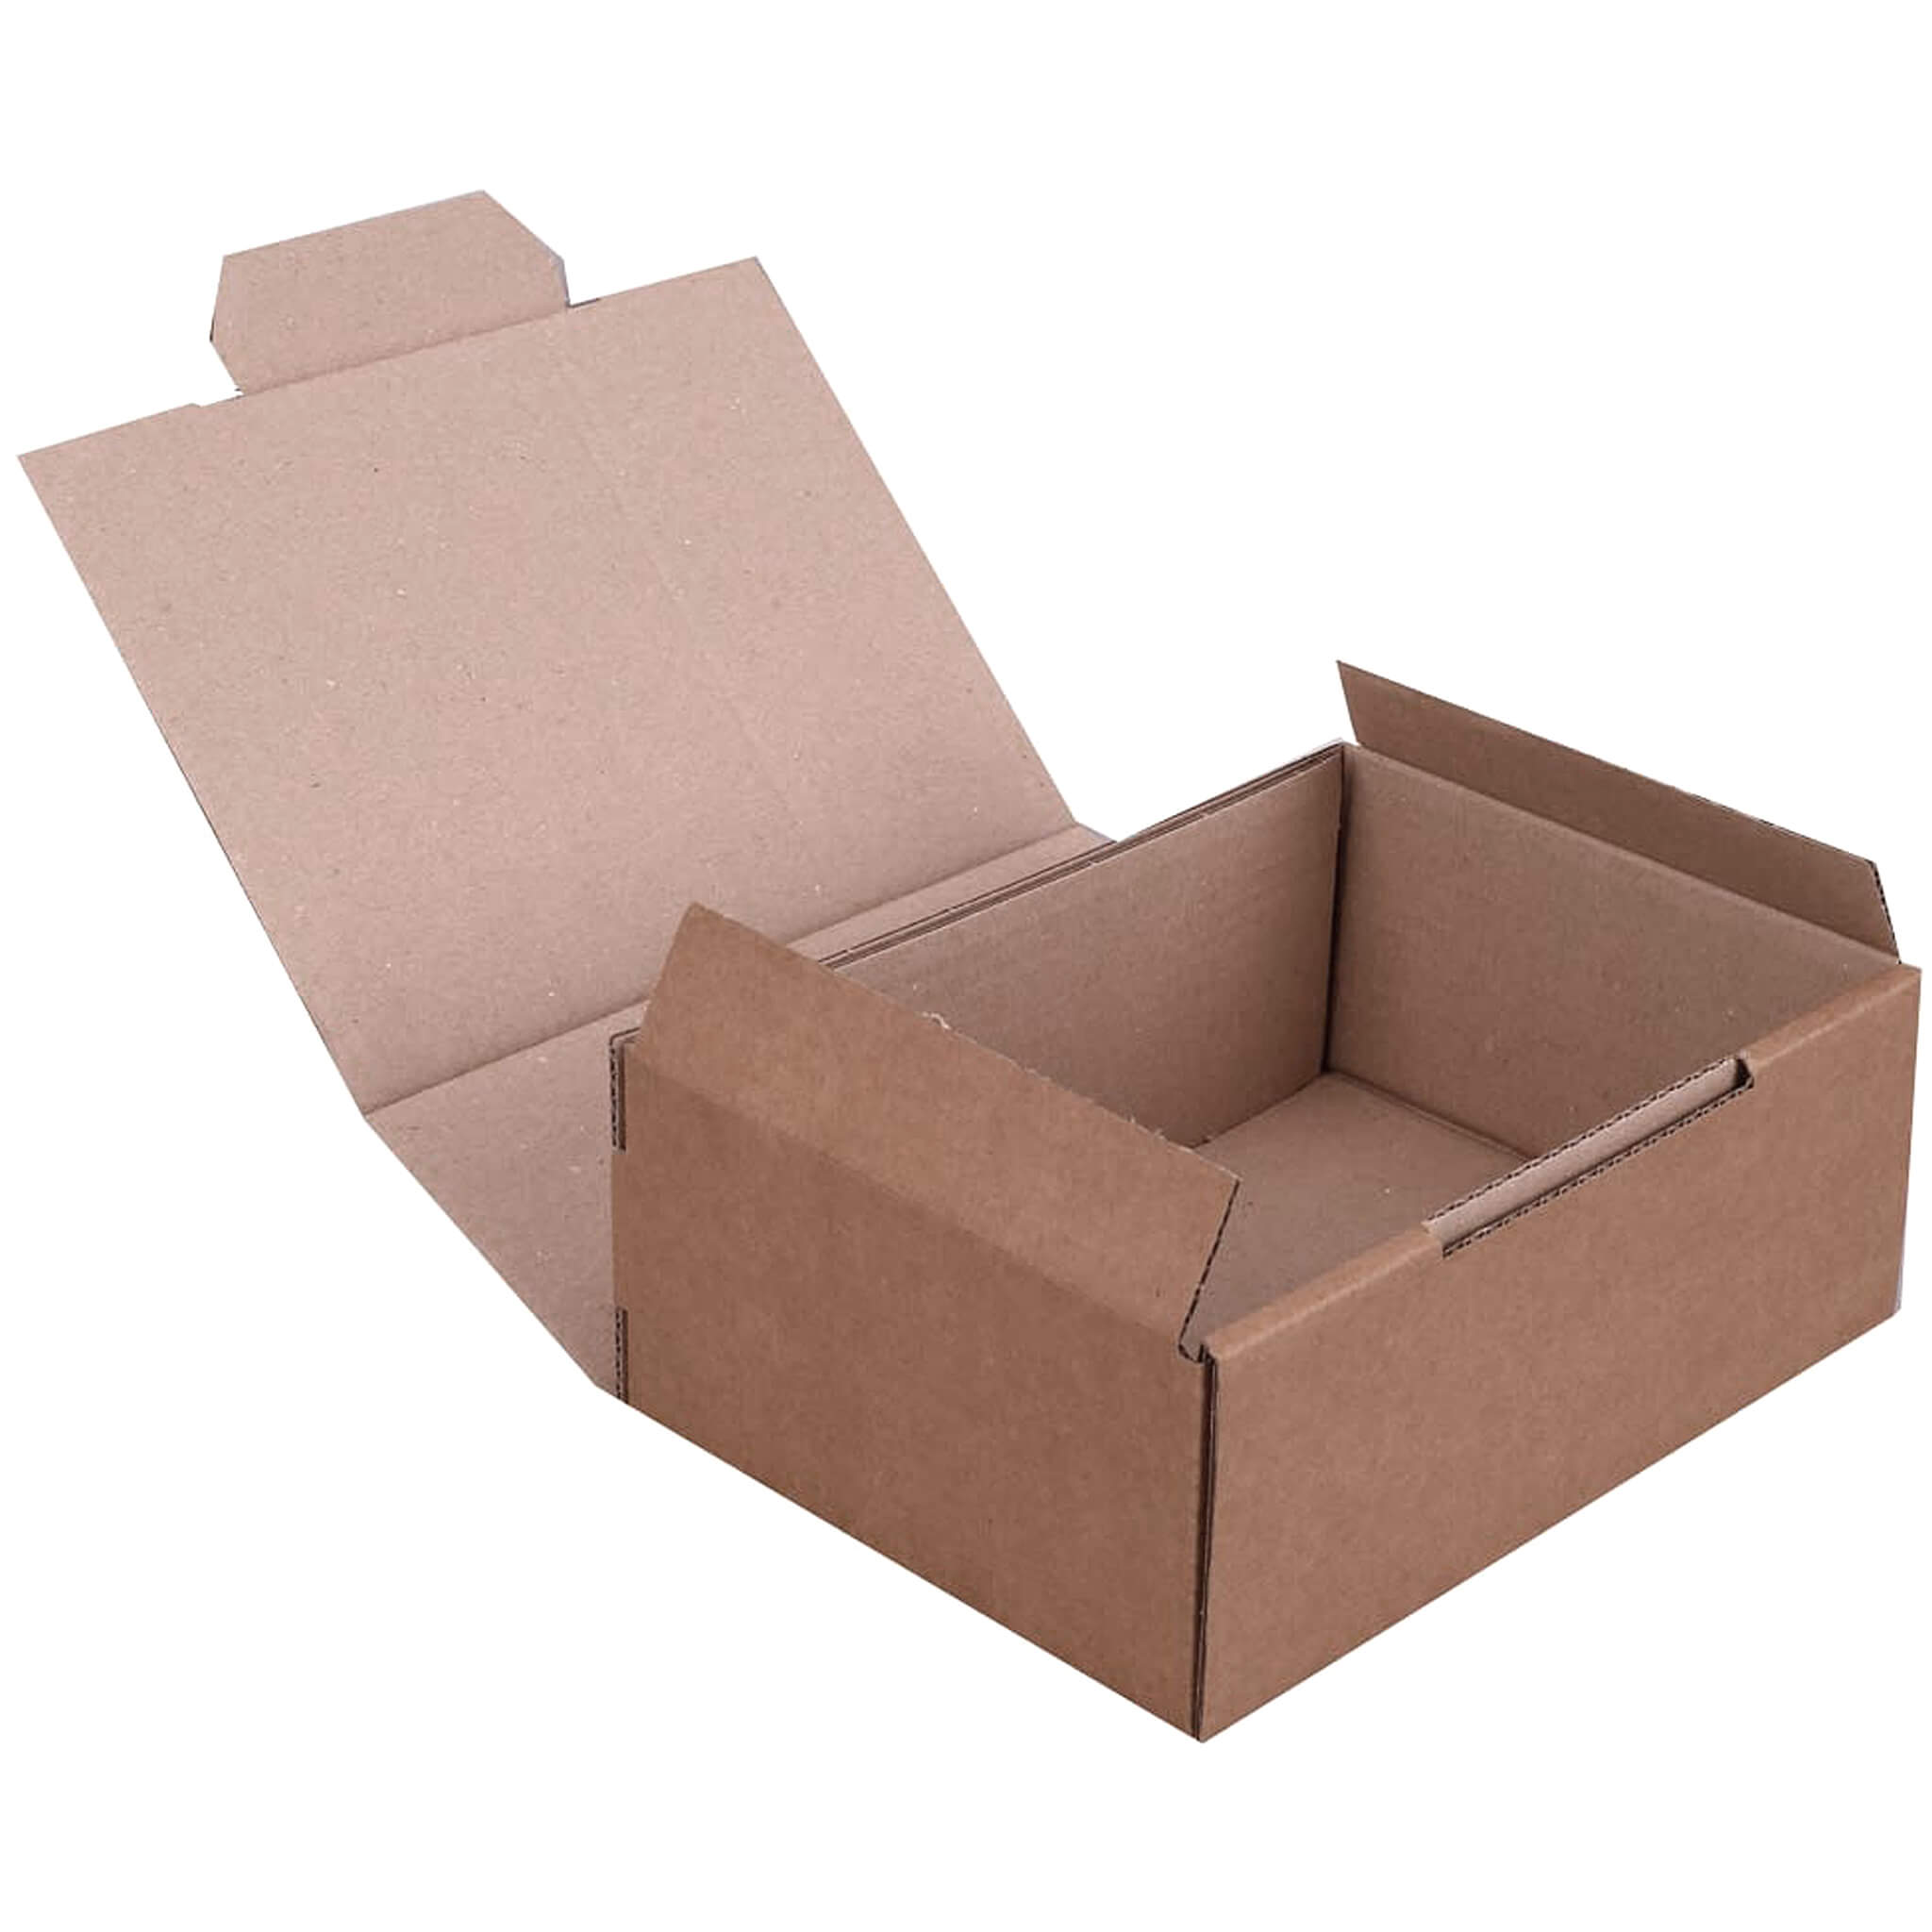 Boite carton - (L)175 x (P)115 x (H)45 mm - Marron